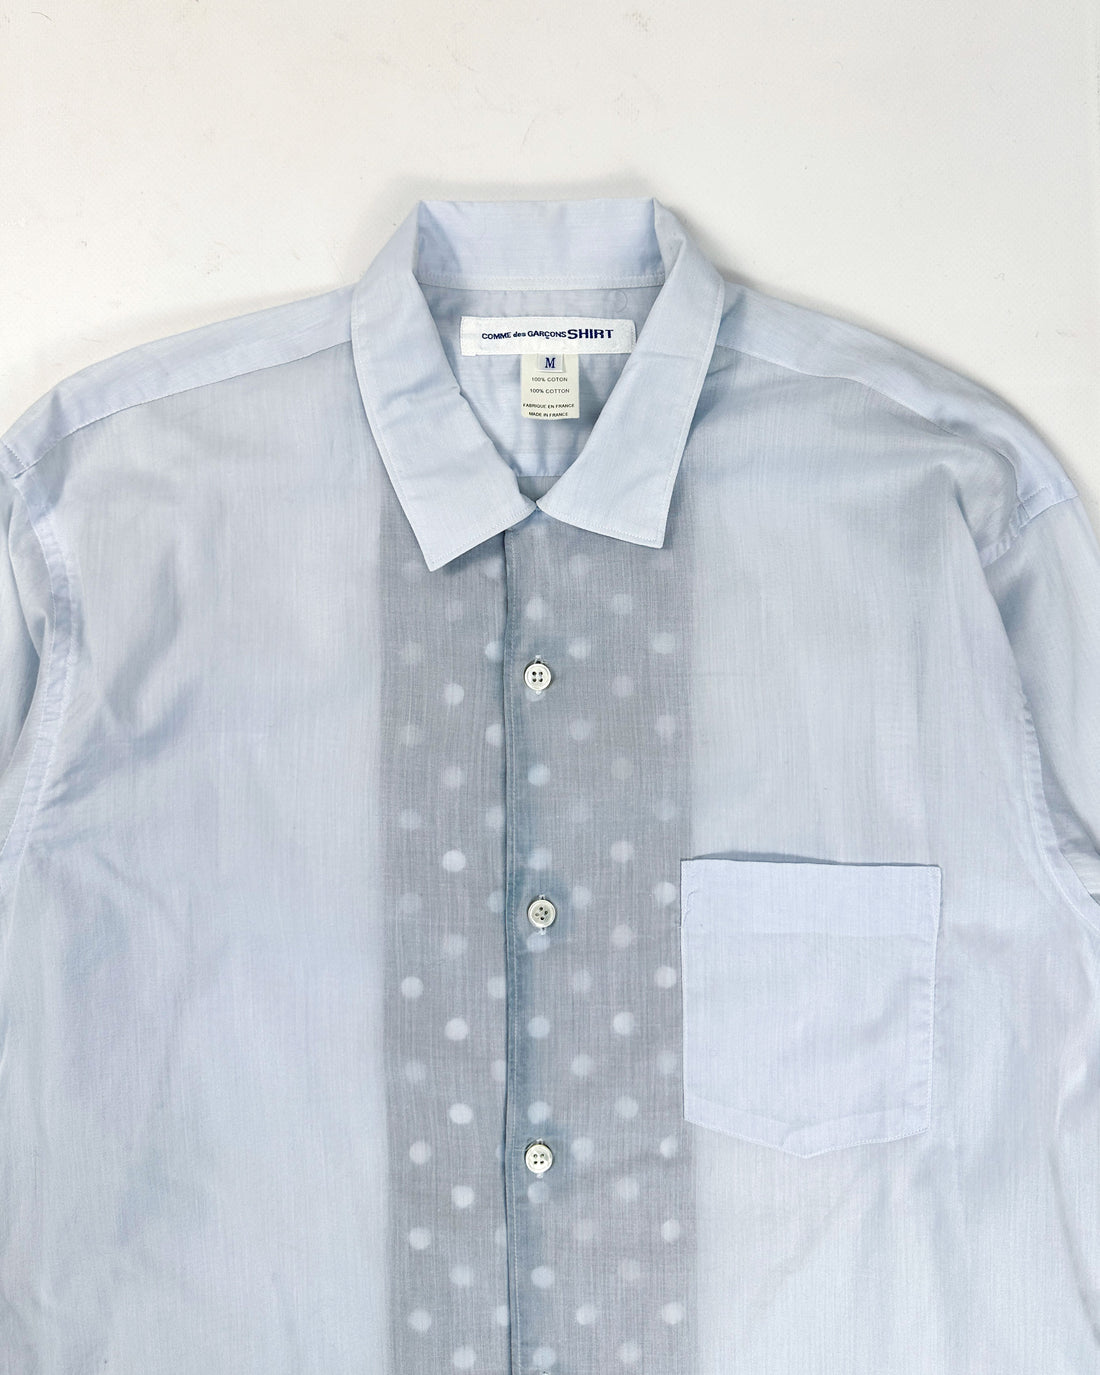 Comme des Garçons Shirt 2-Layer Translucid Blue Shirt 2006